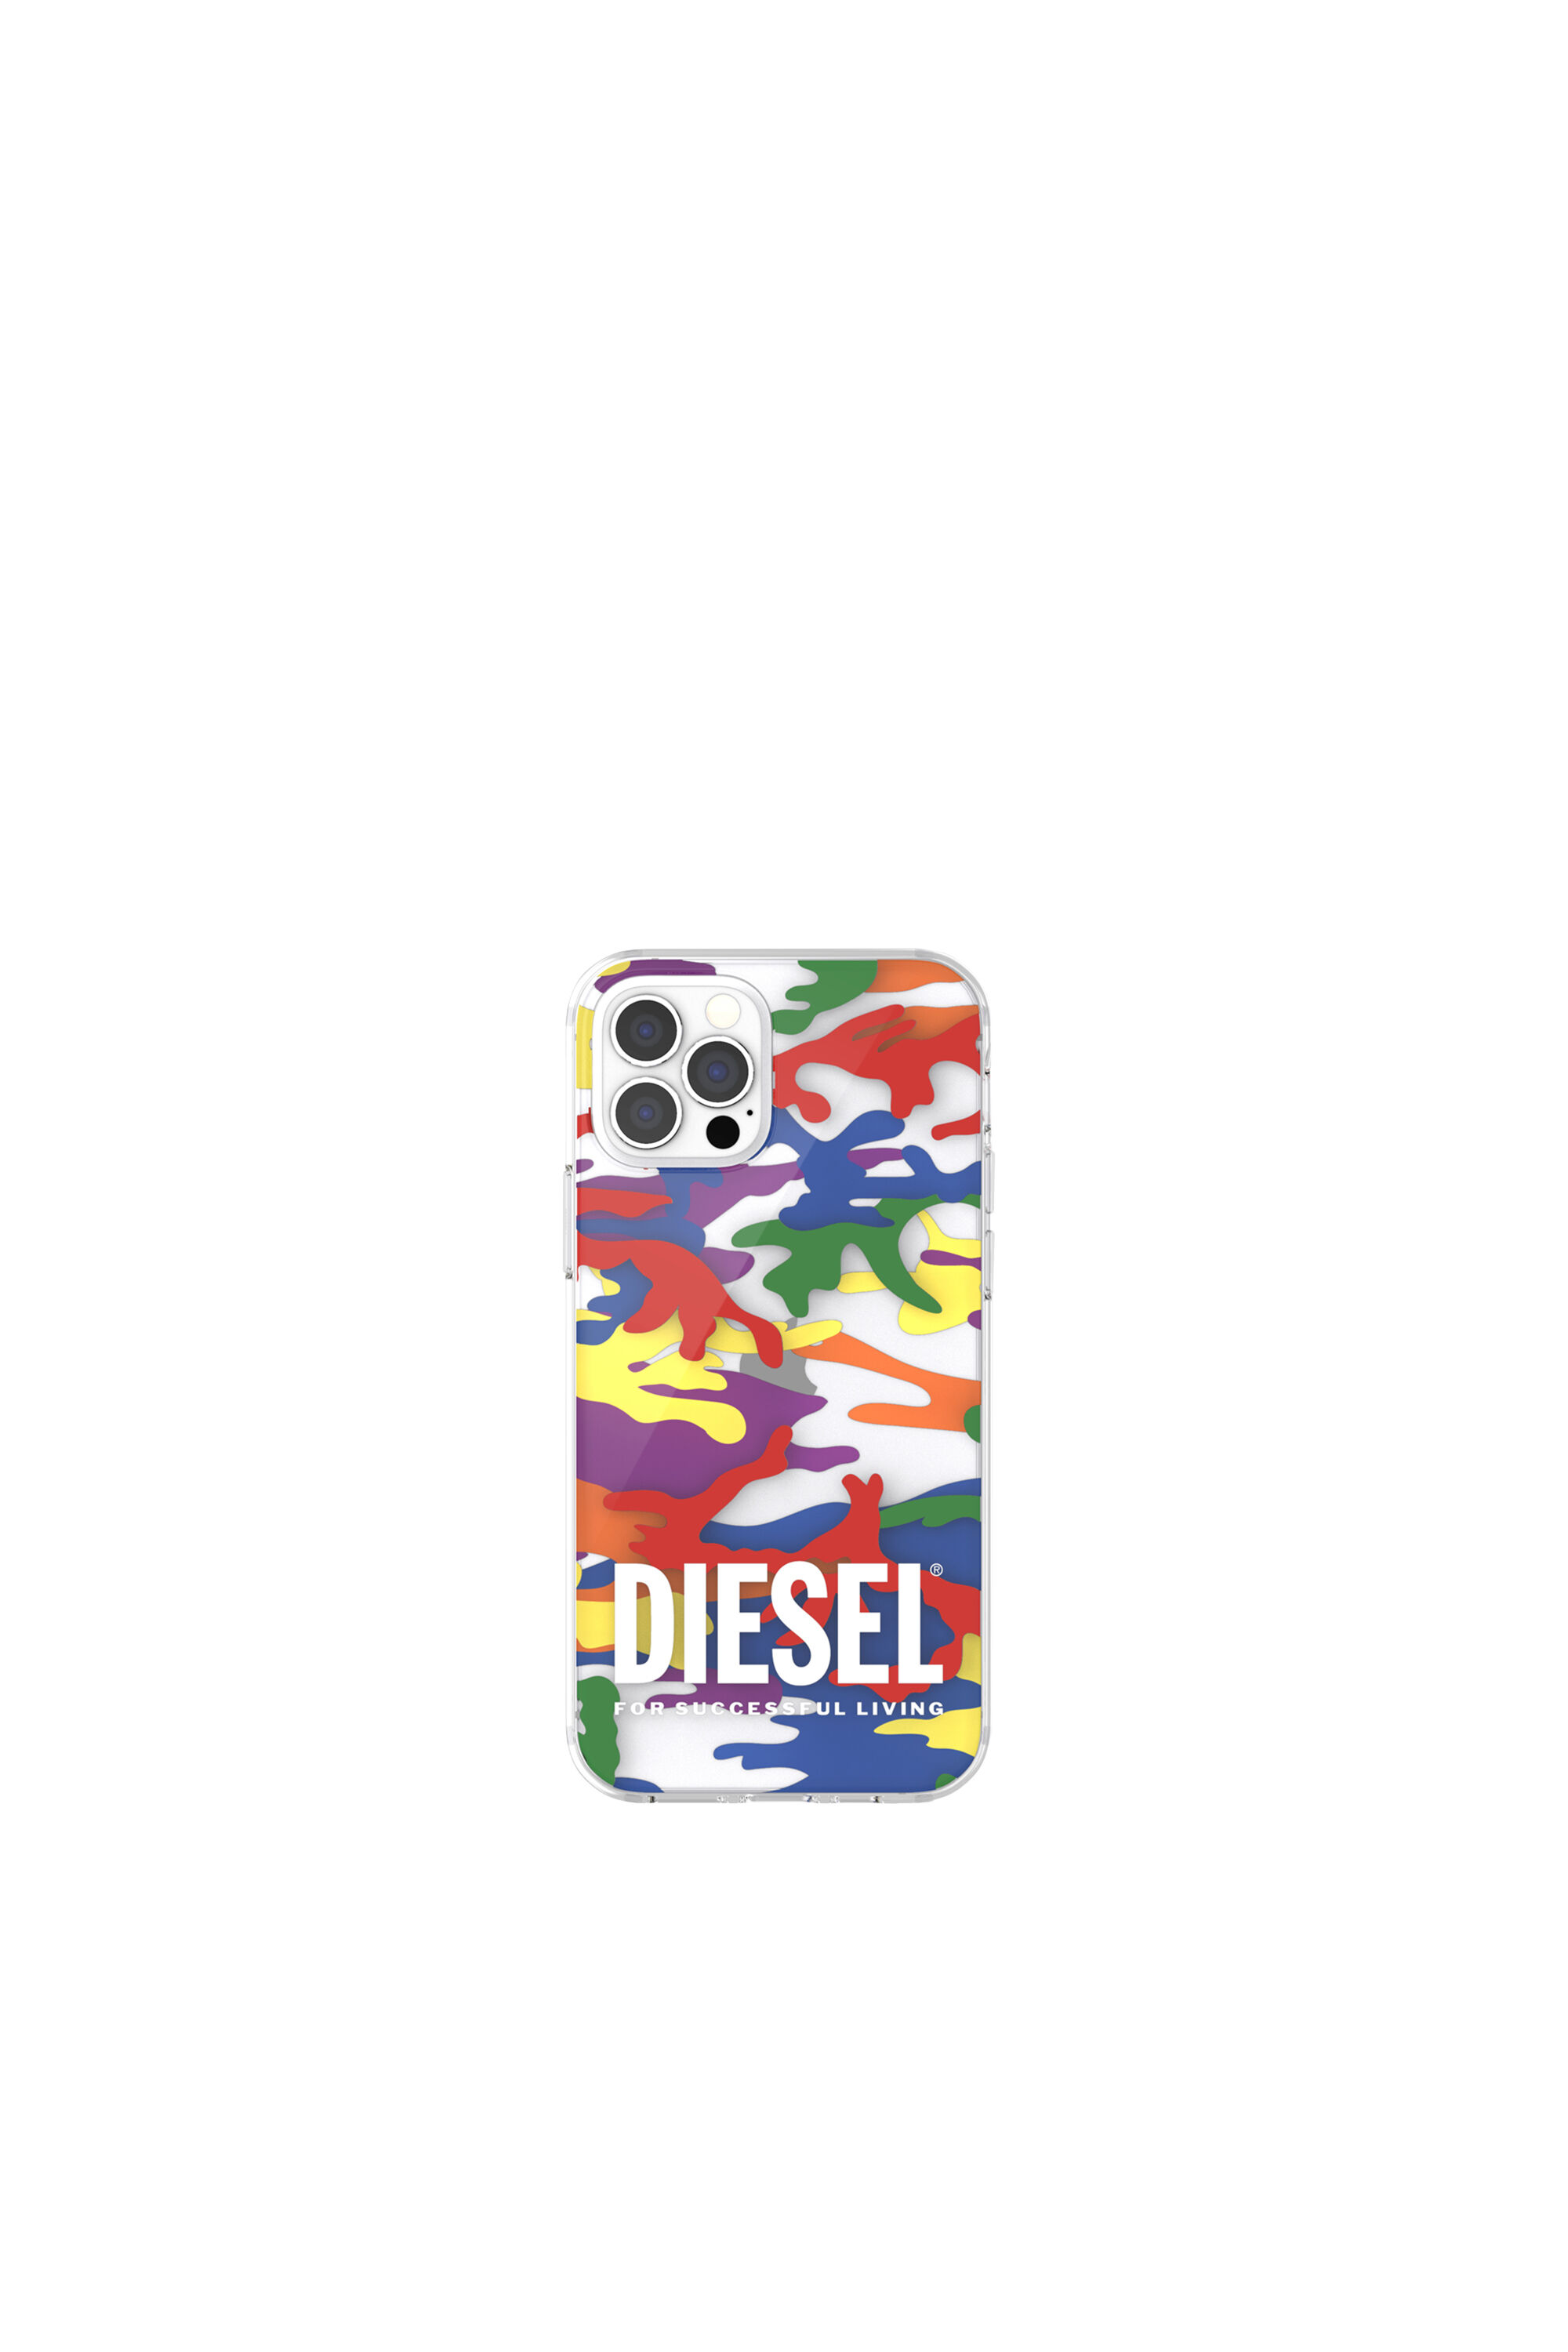 Diesel - 44332  STANDARD CASES, Multicolor - Image 2